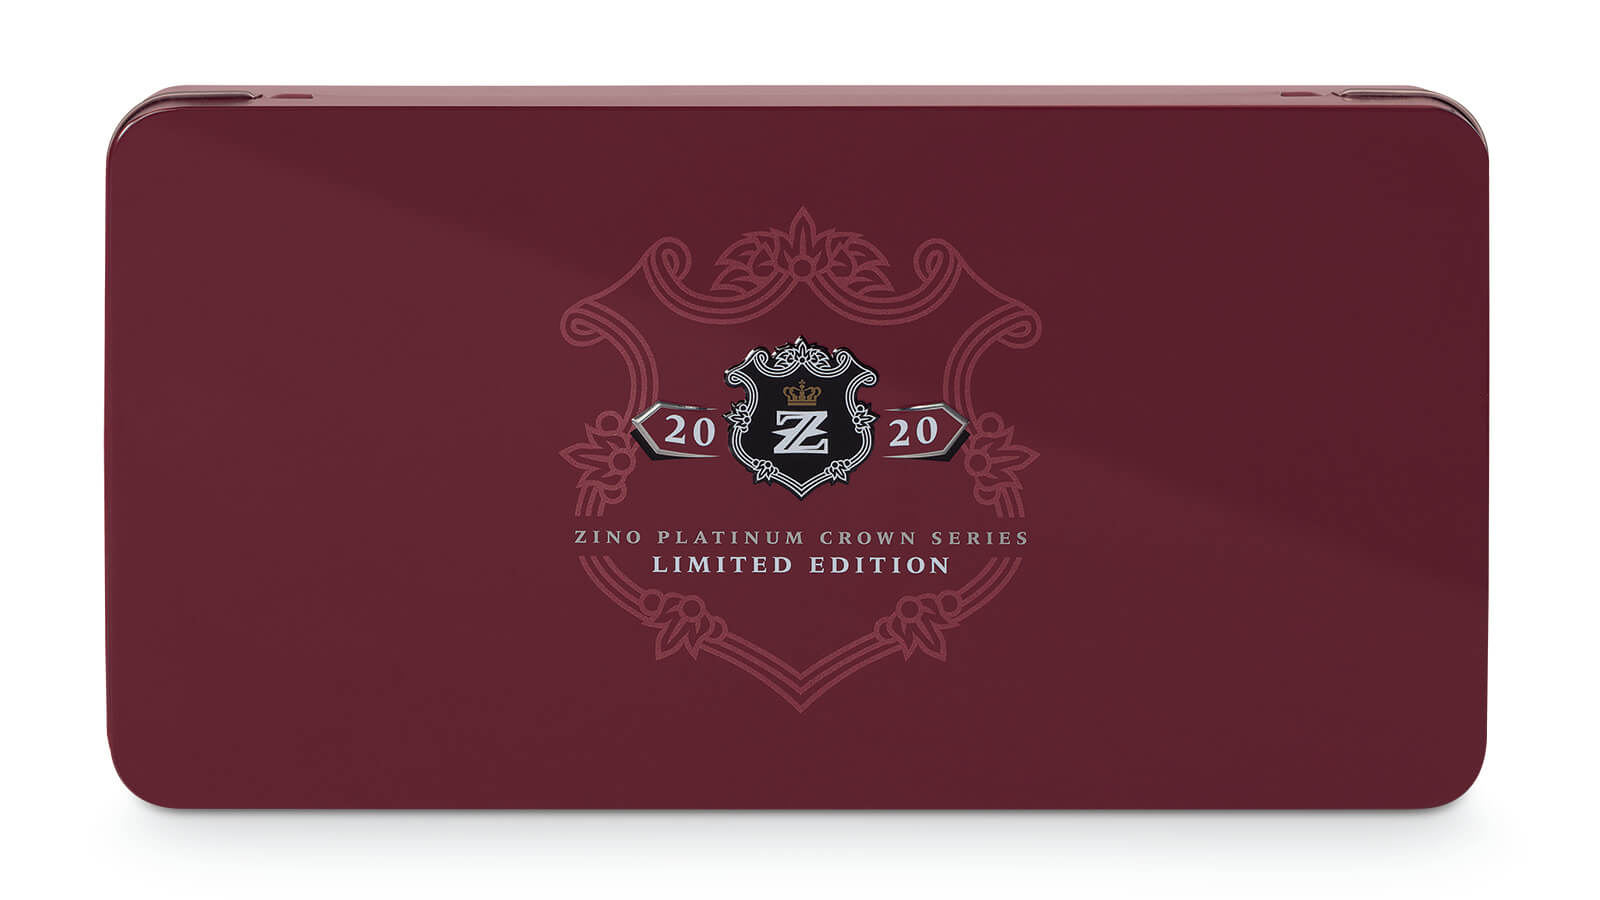 Zino Platinum Crown Series Limited Edition 2020